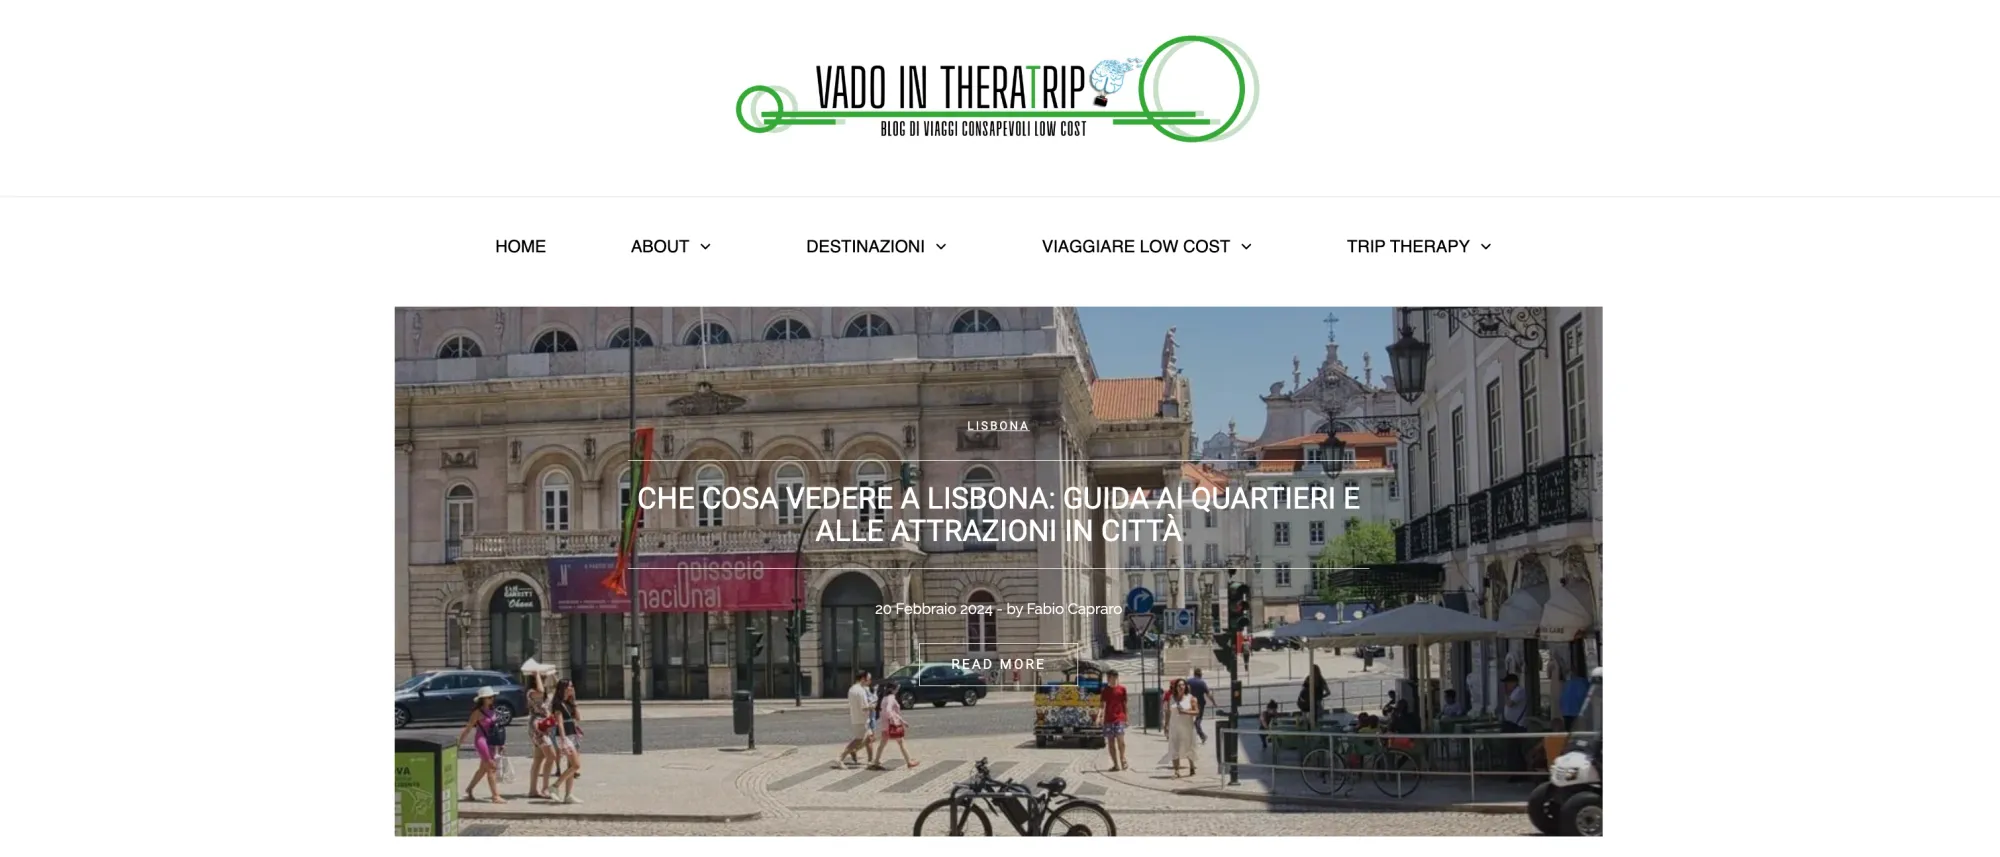 vadointheratrip, un blog di un nomade digitale italiano